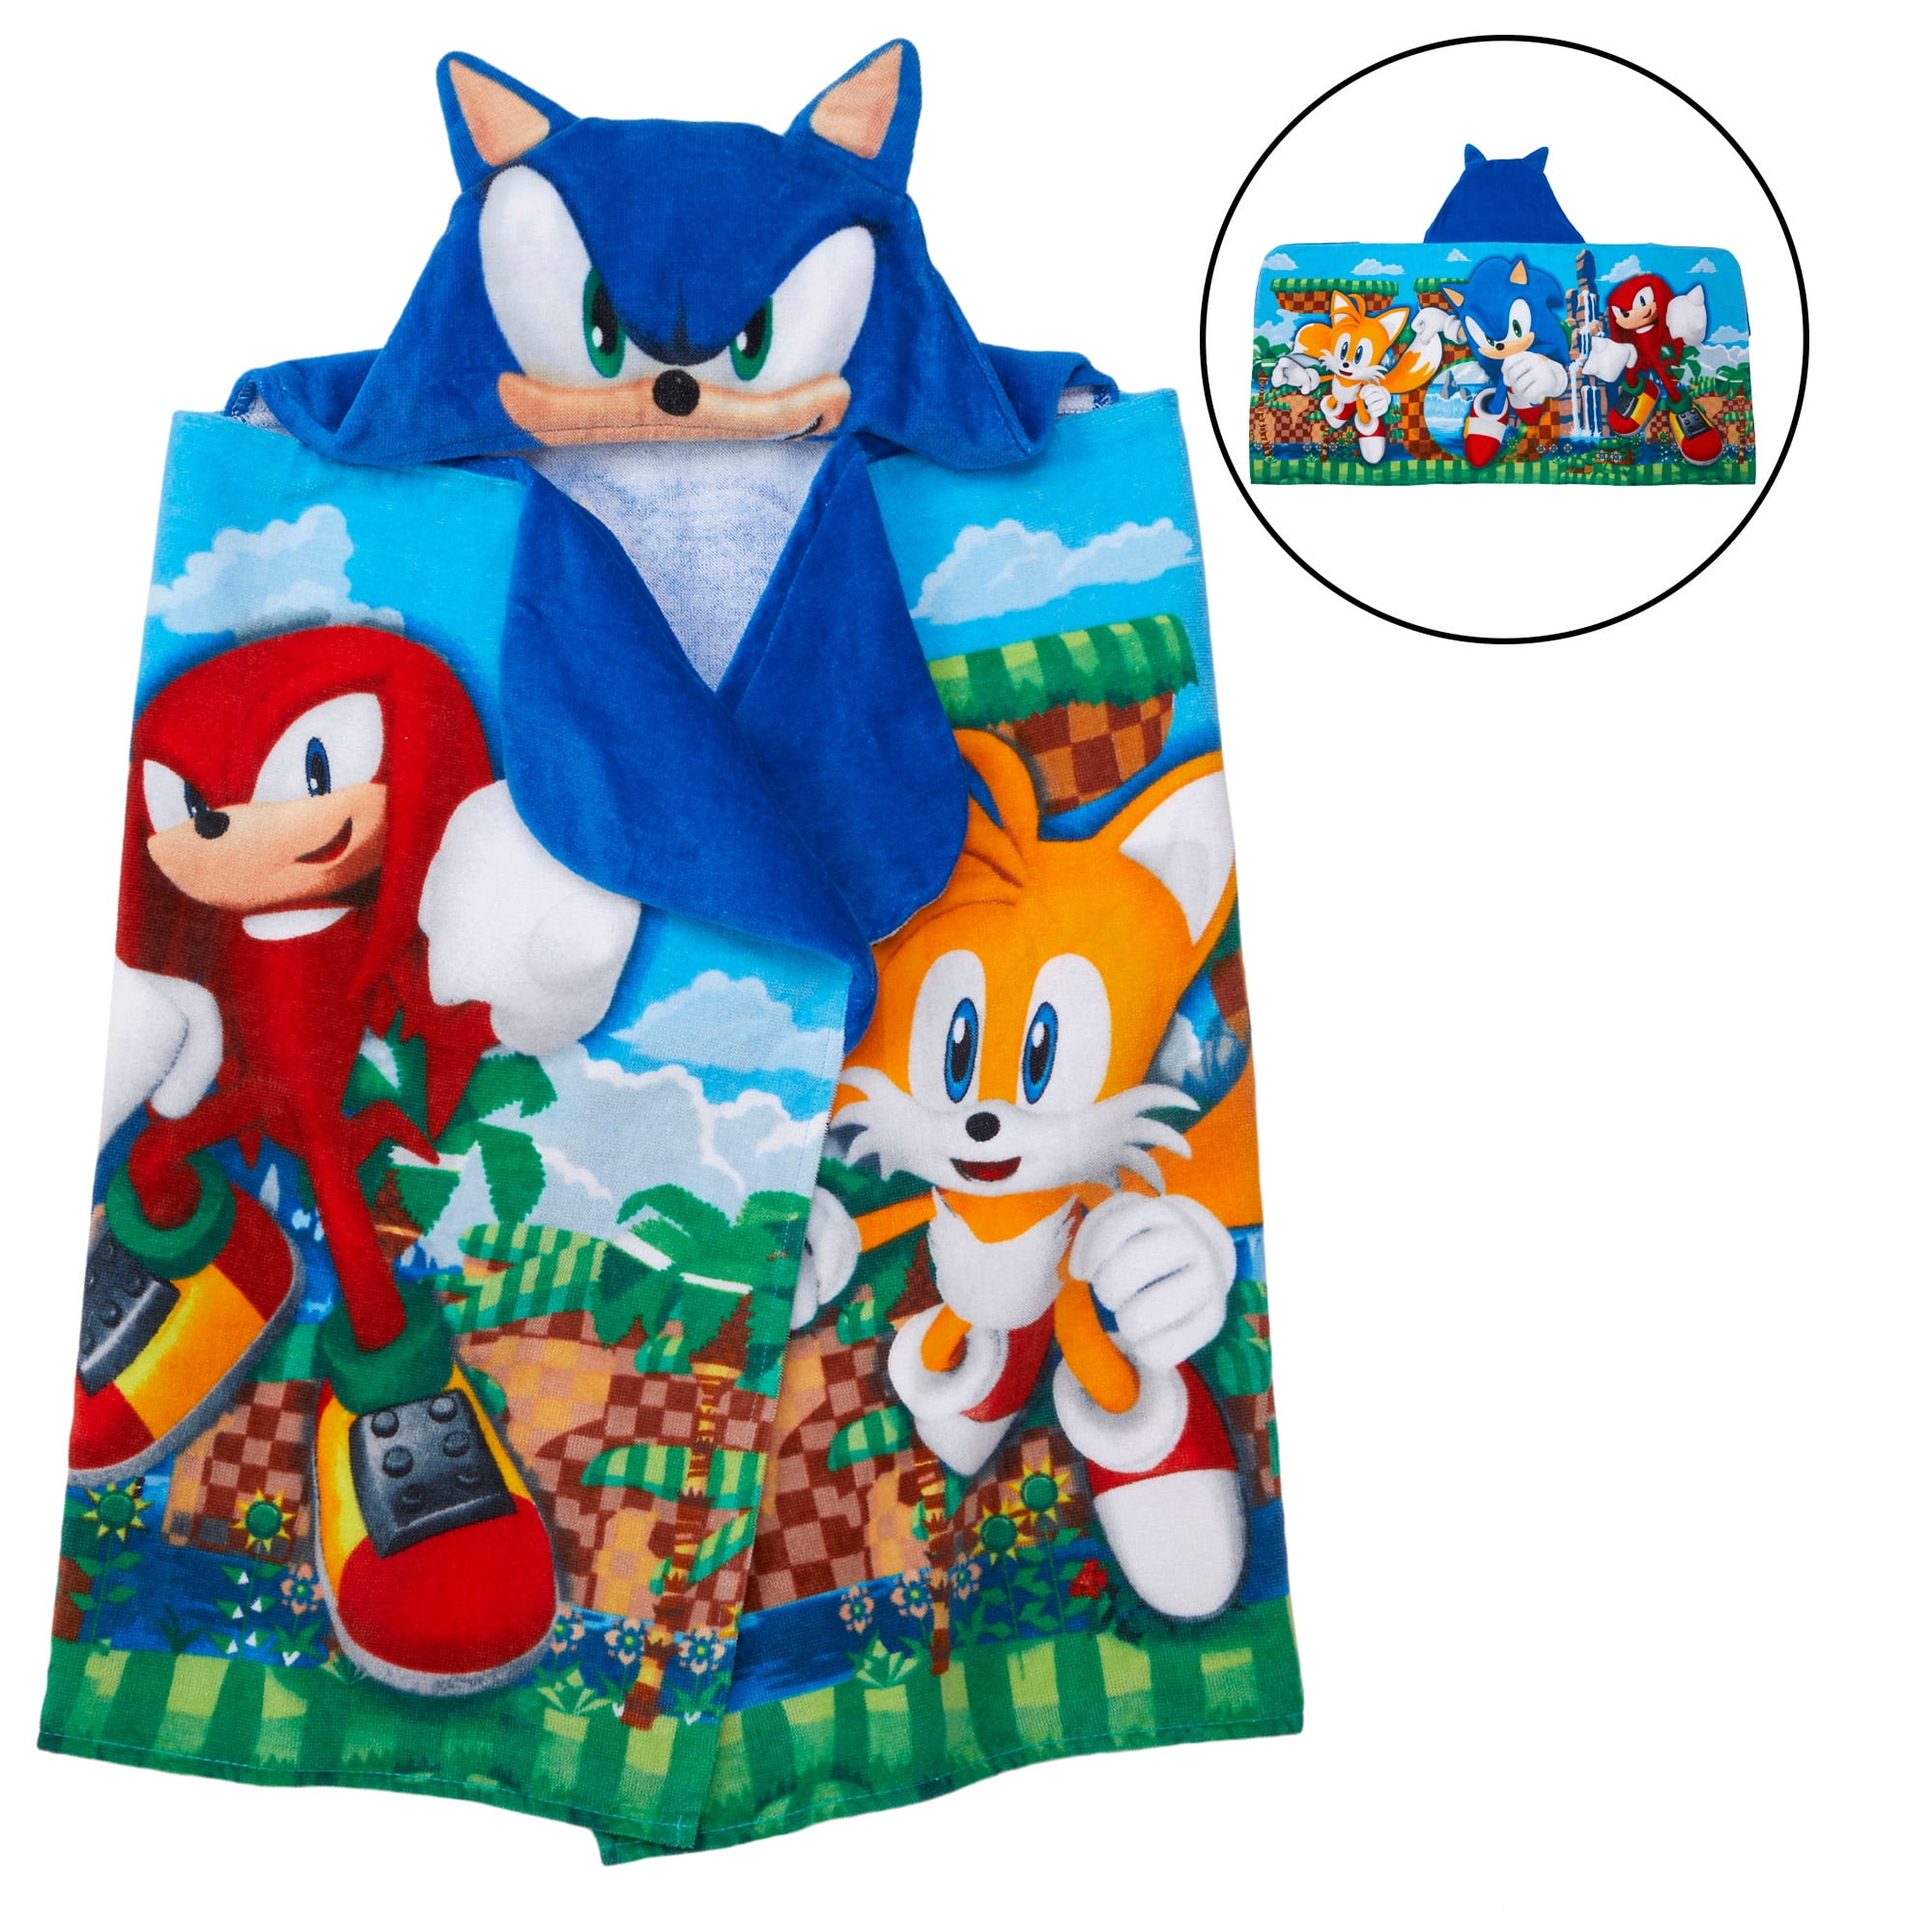 Sonic the Hedgehog Kids Bath Hooded Towel, Cotton, Blue, Sega